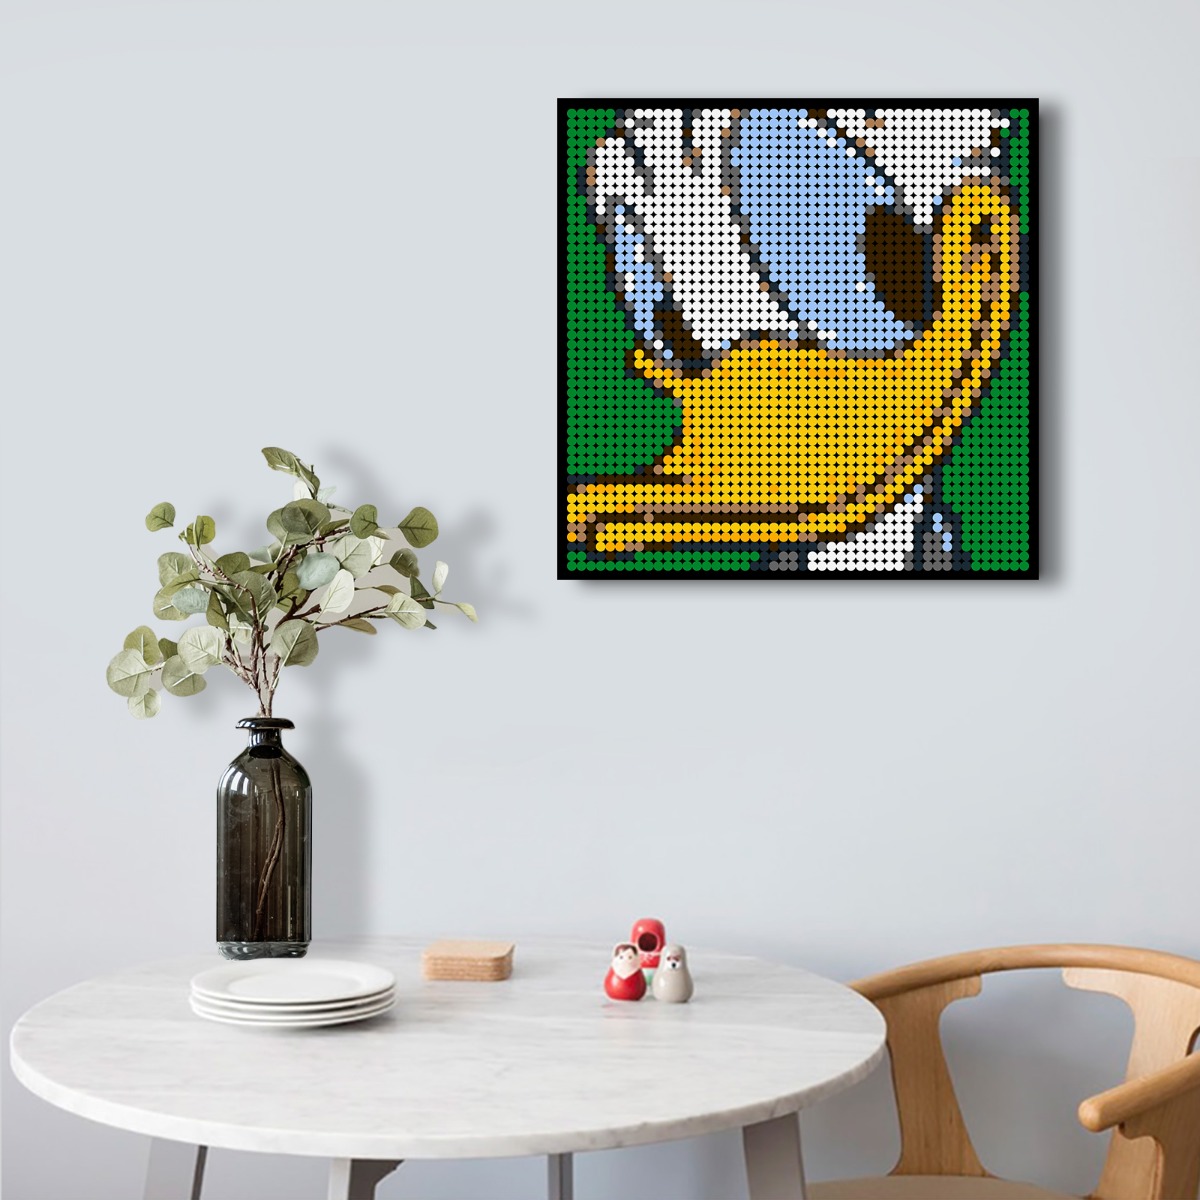 moc 90151 donald duck pixel art movie moc factory 213825 - LEPIN Germany